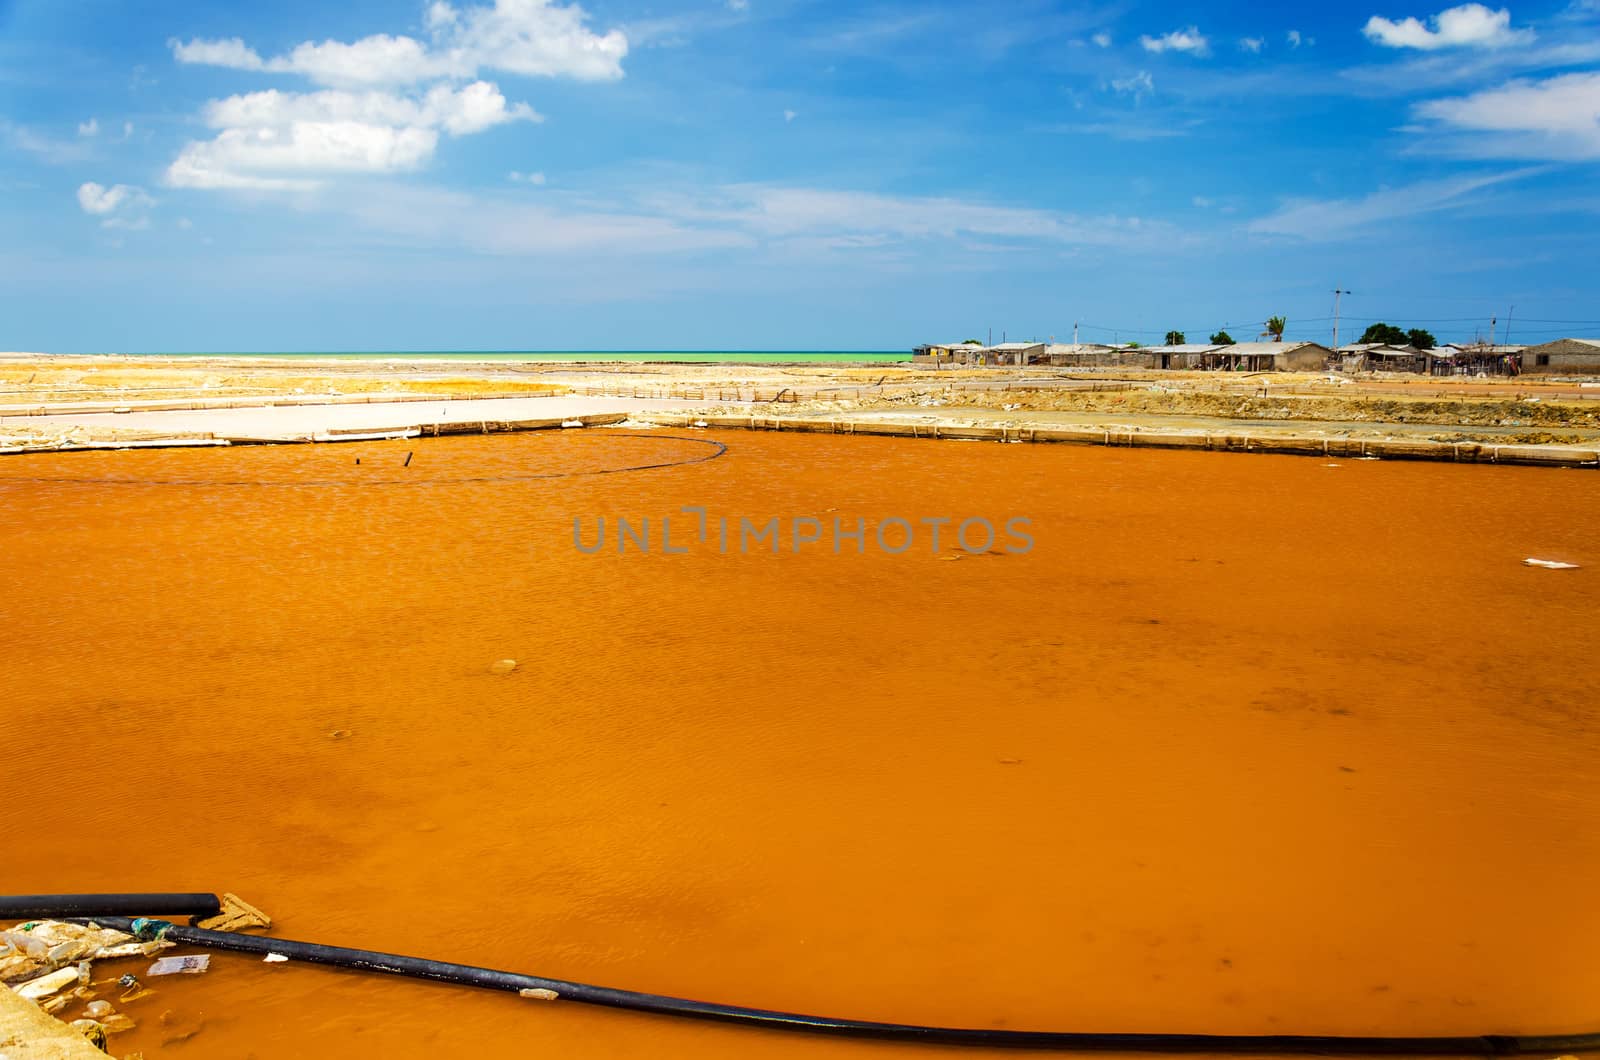 Sea Salt Production by jkraft5